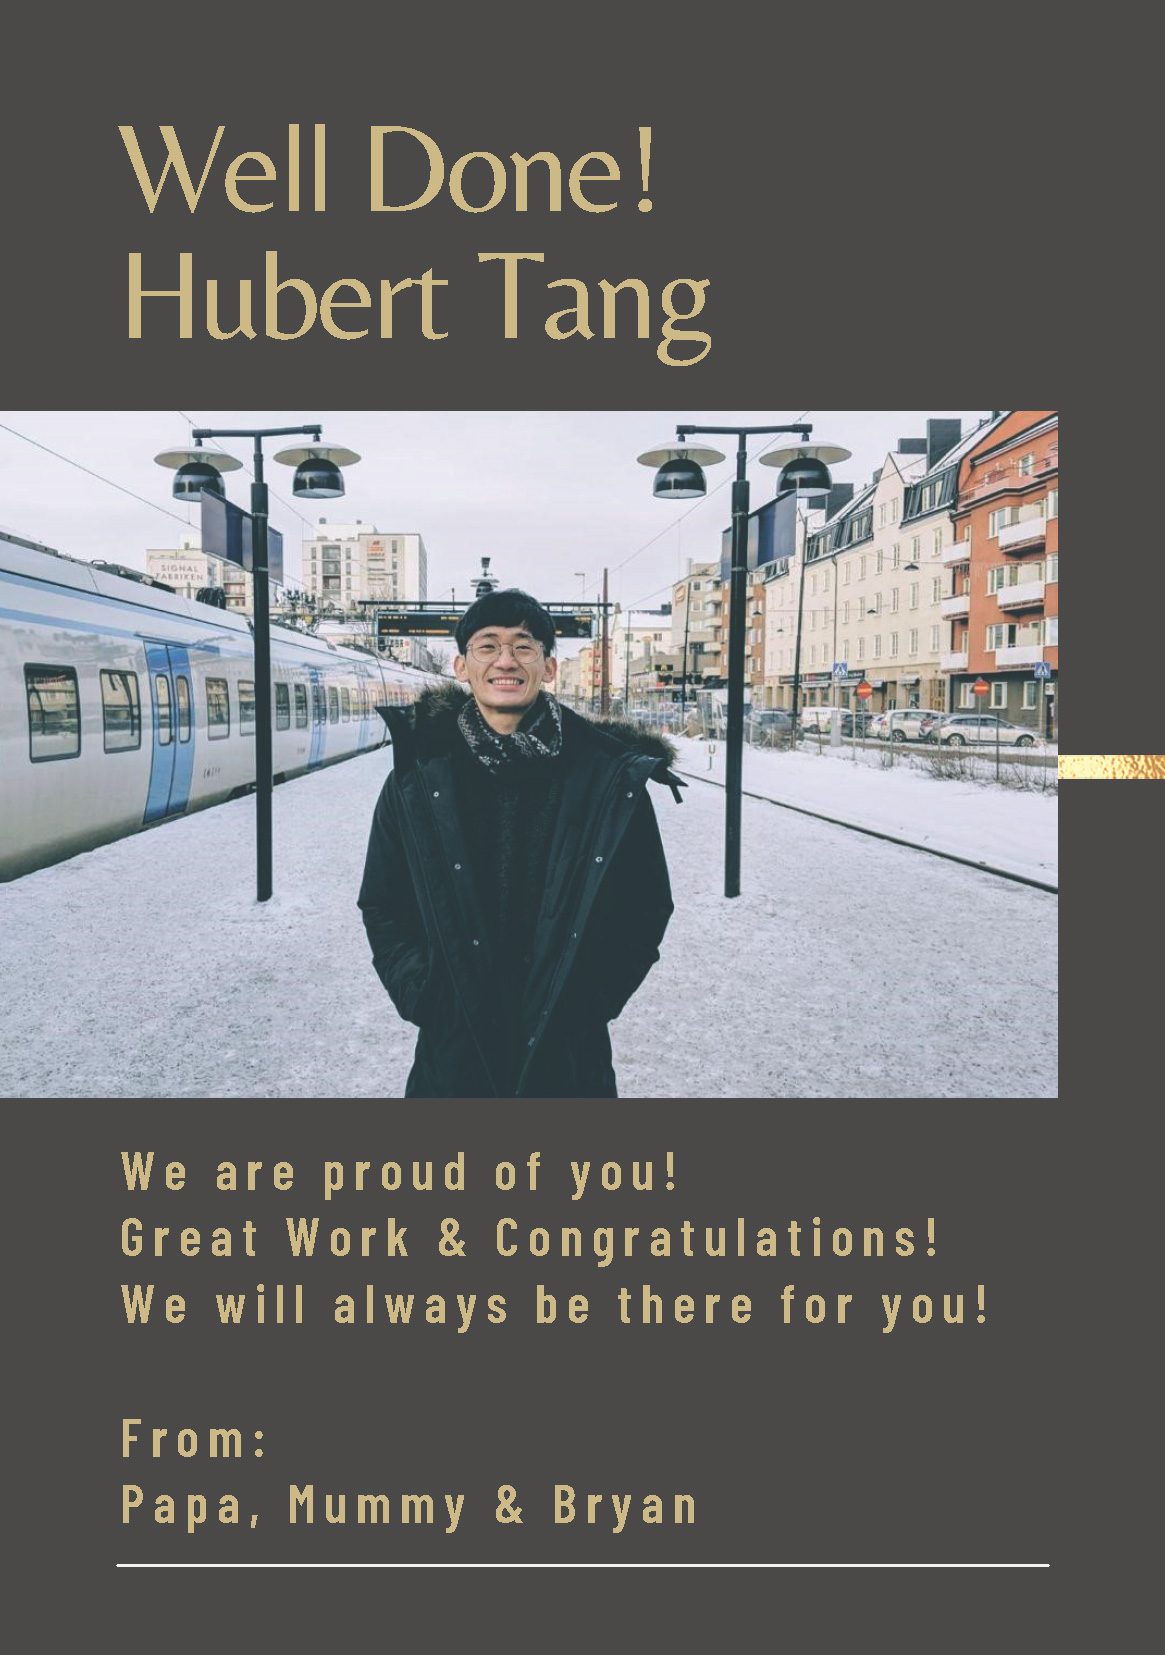 Hubert Tang